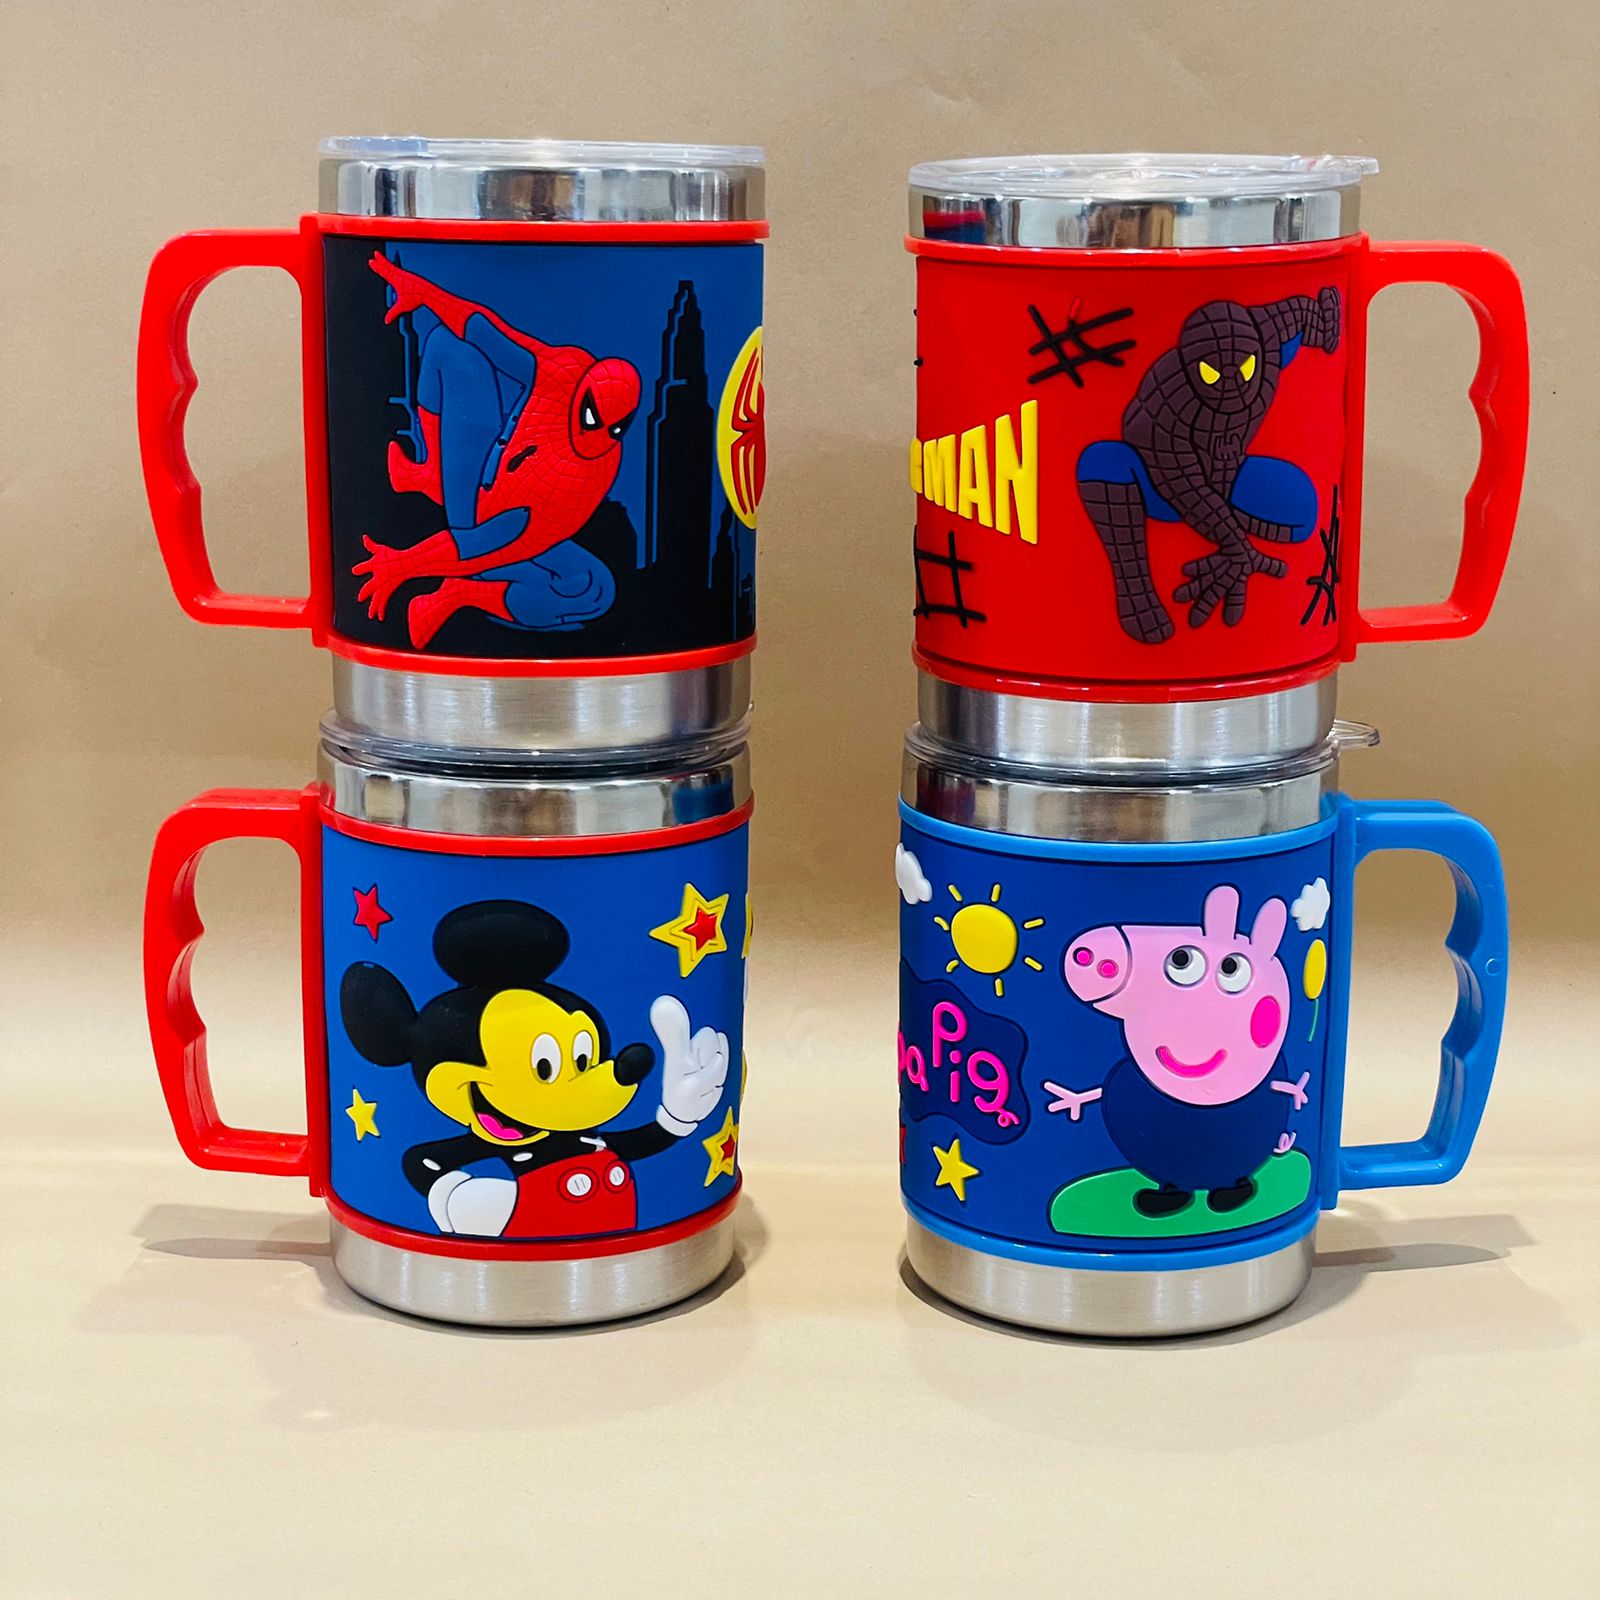 Stainless Steel Mug with Lid for Kids, Milk Mug for Kids Milk Drinking –  FunBlast